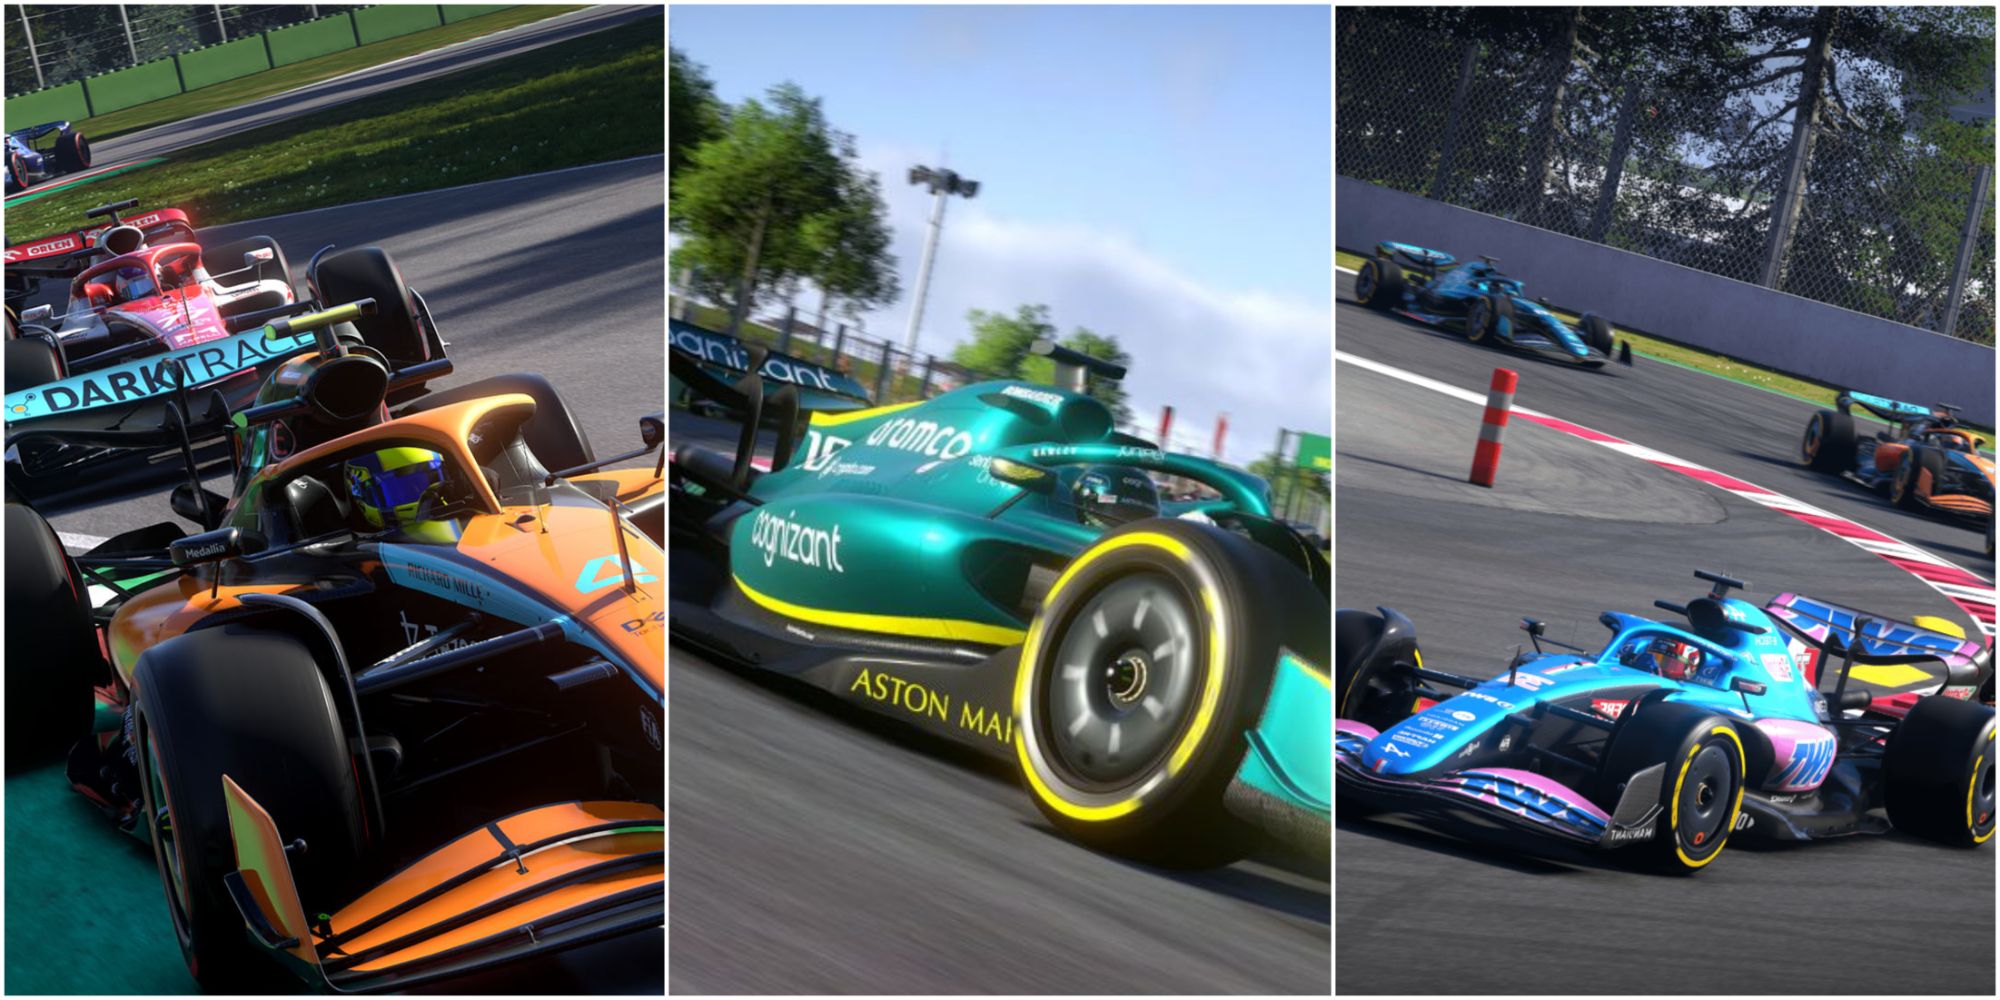 Three shots of different F1 models.